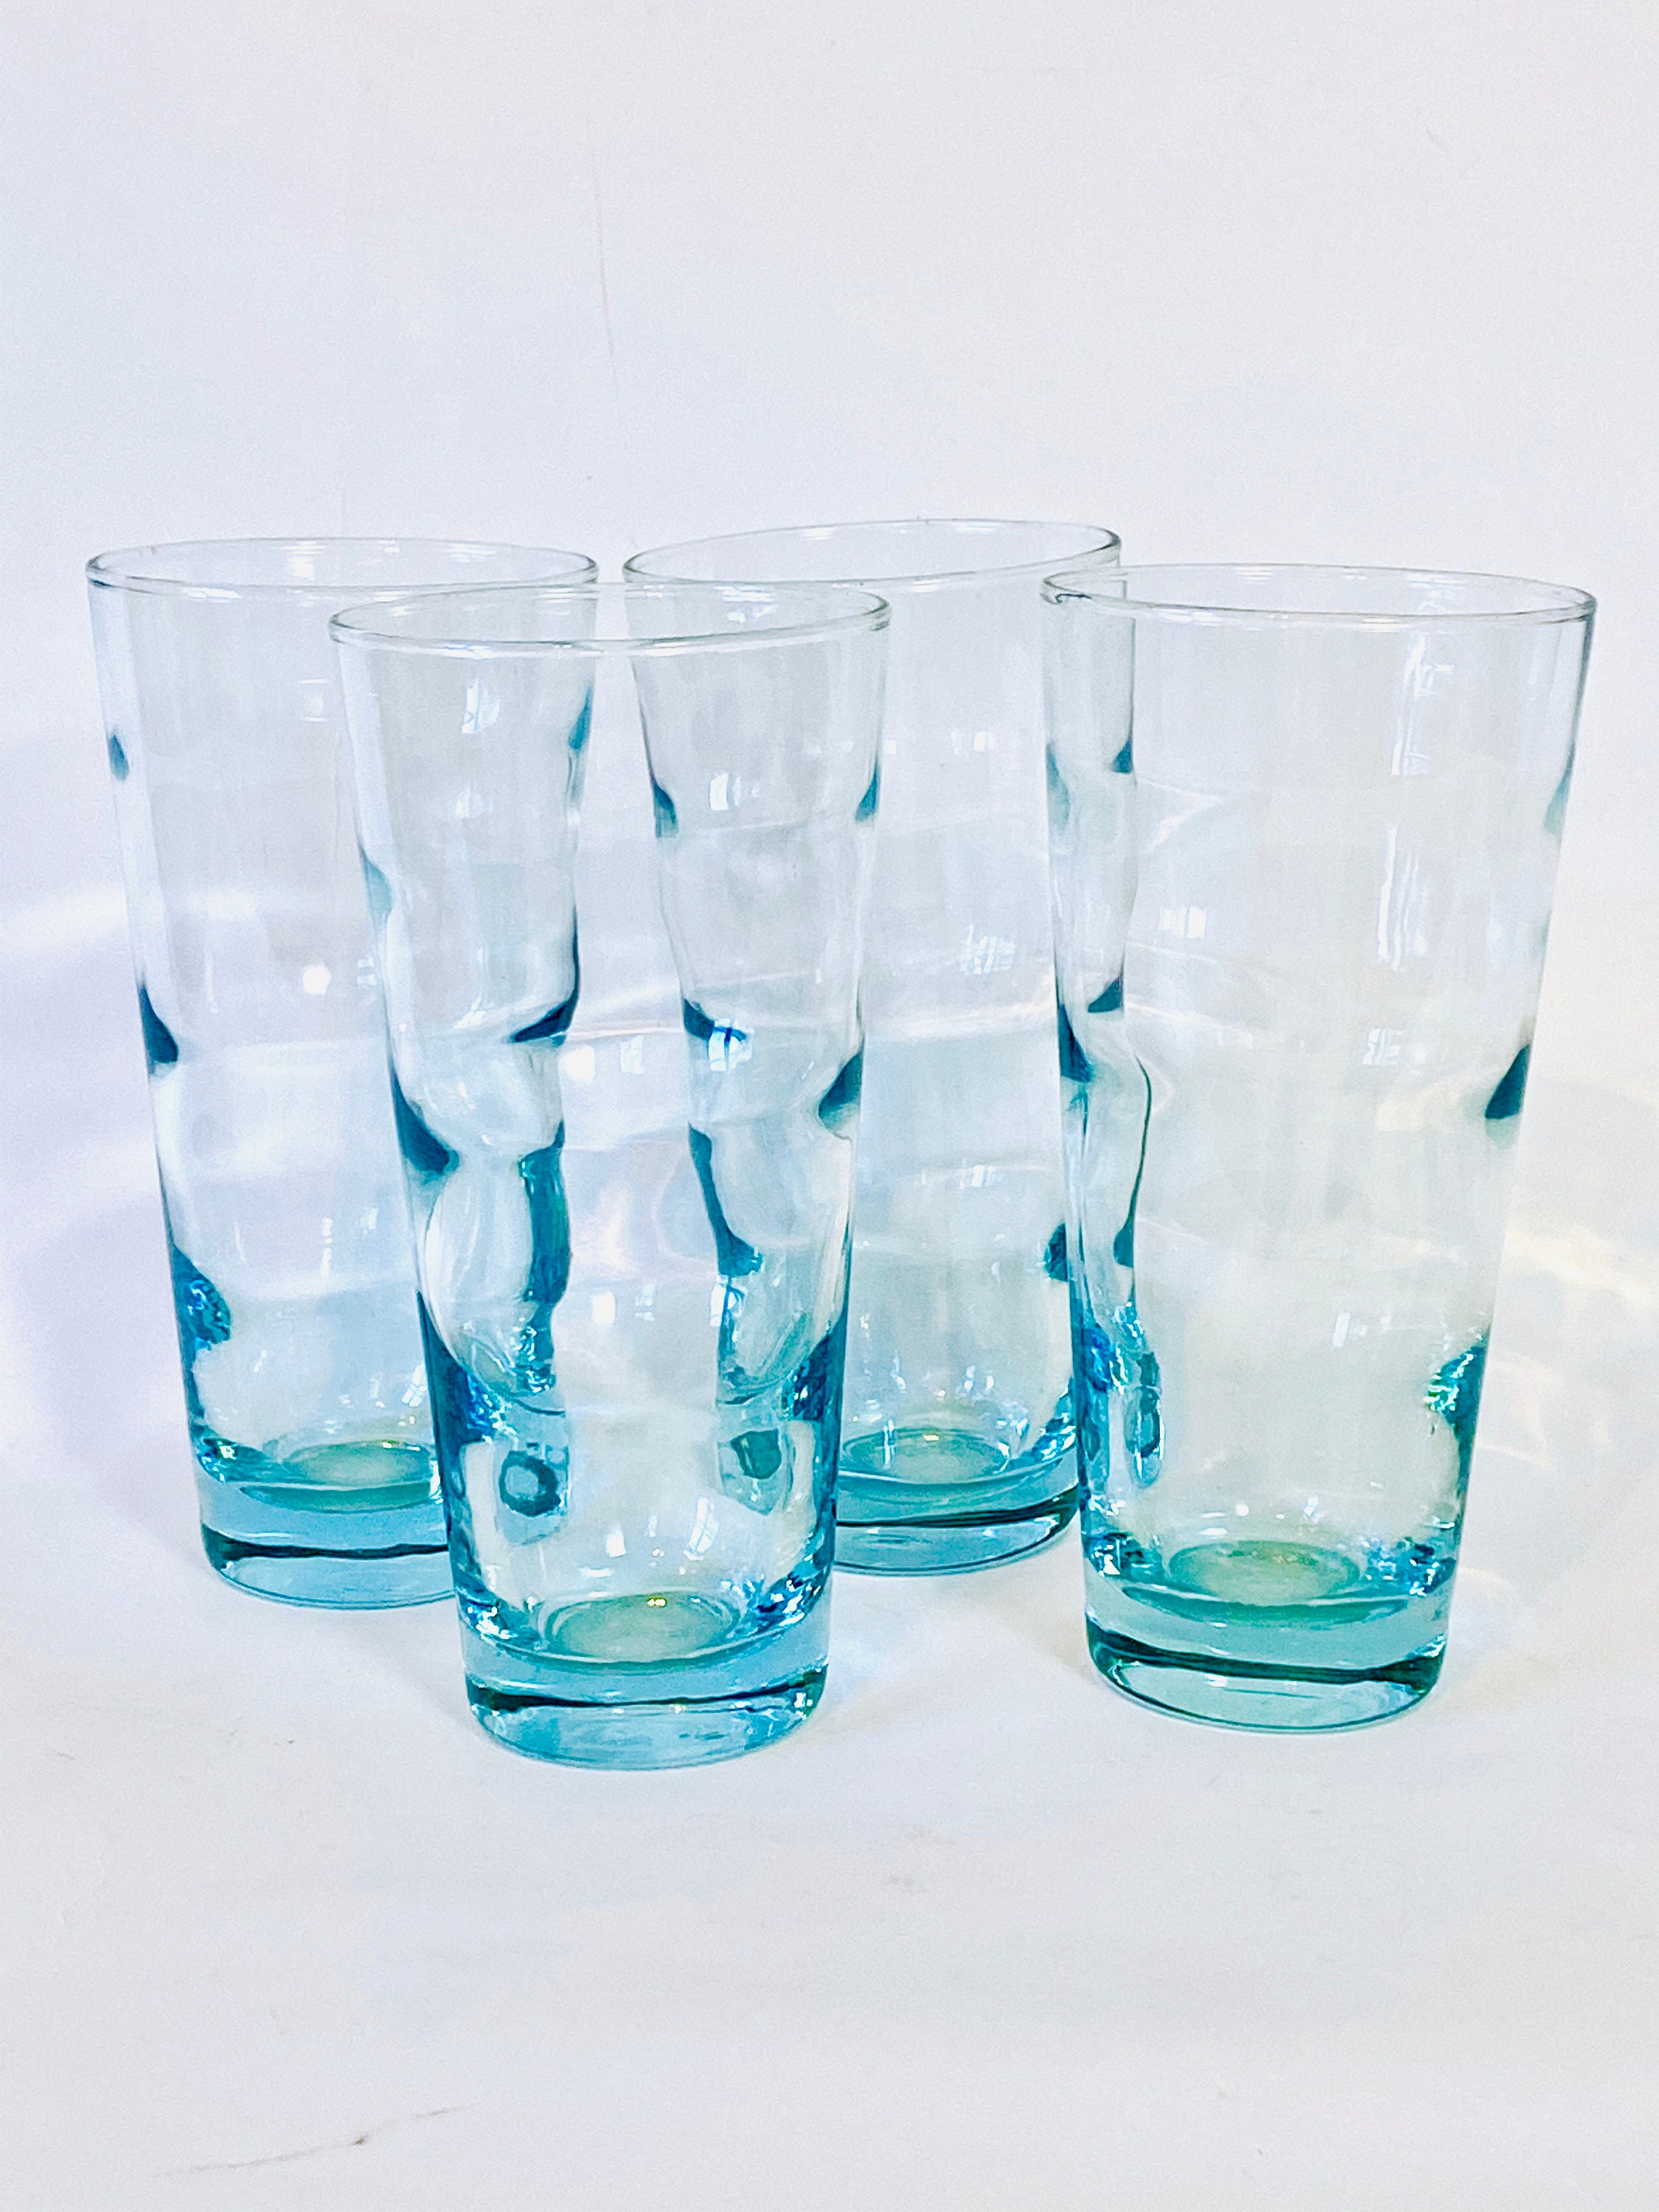 Set of 7 Vintage Mid Century Modern Drinking Glasses Blue White